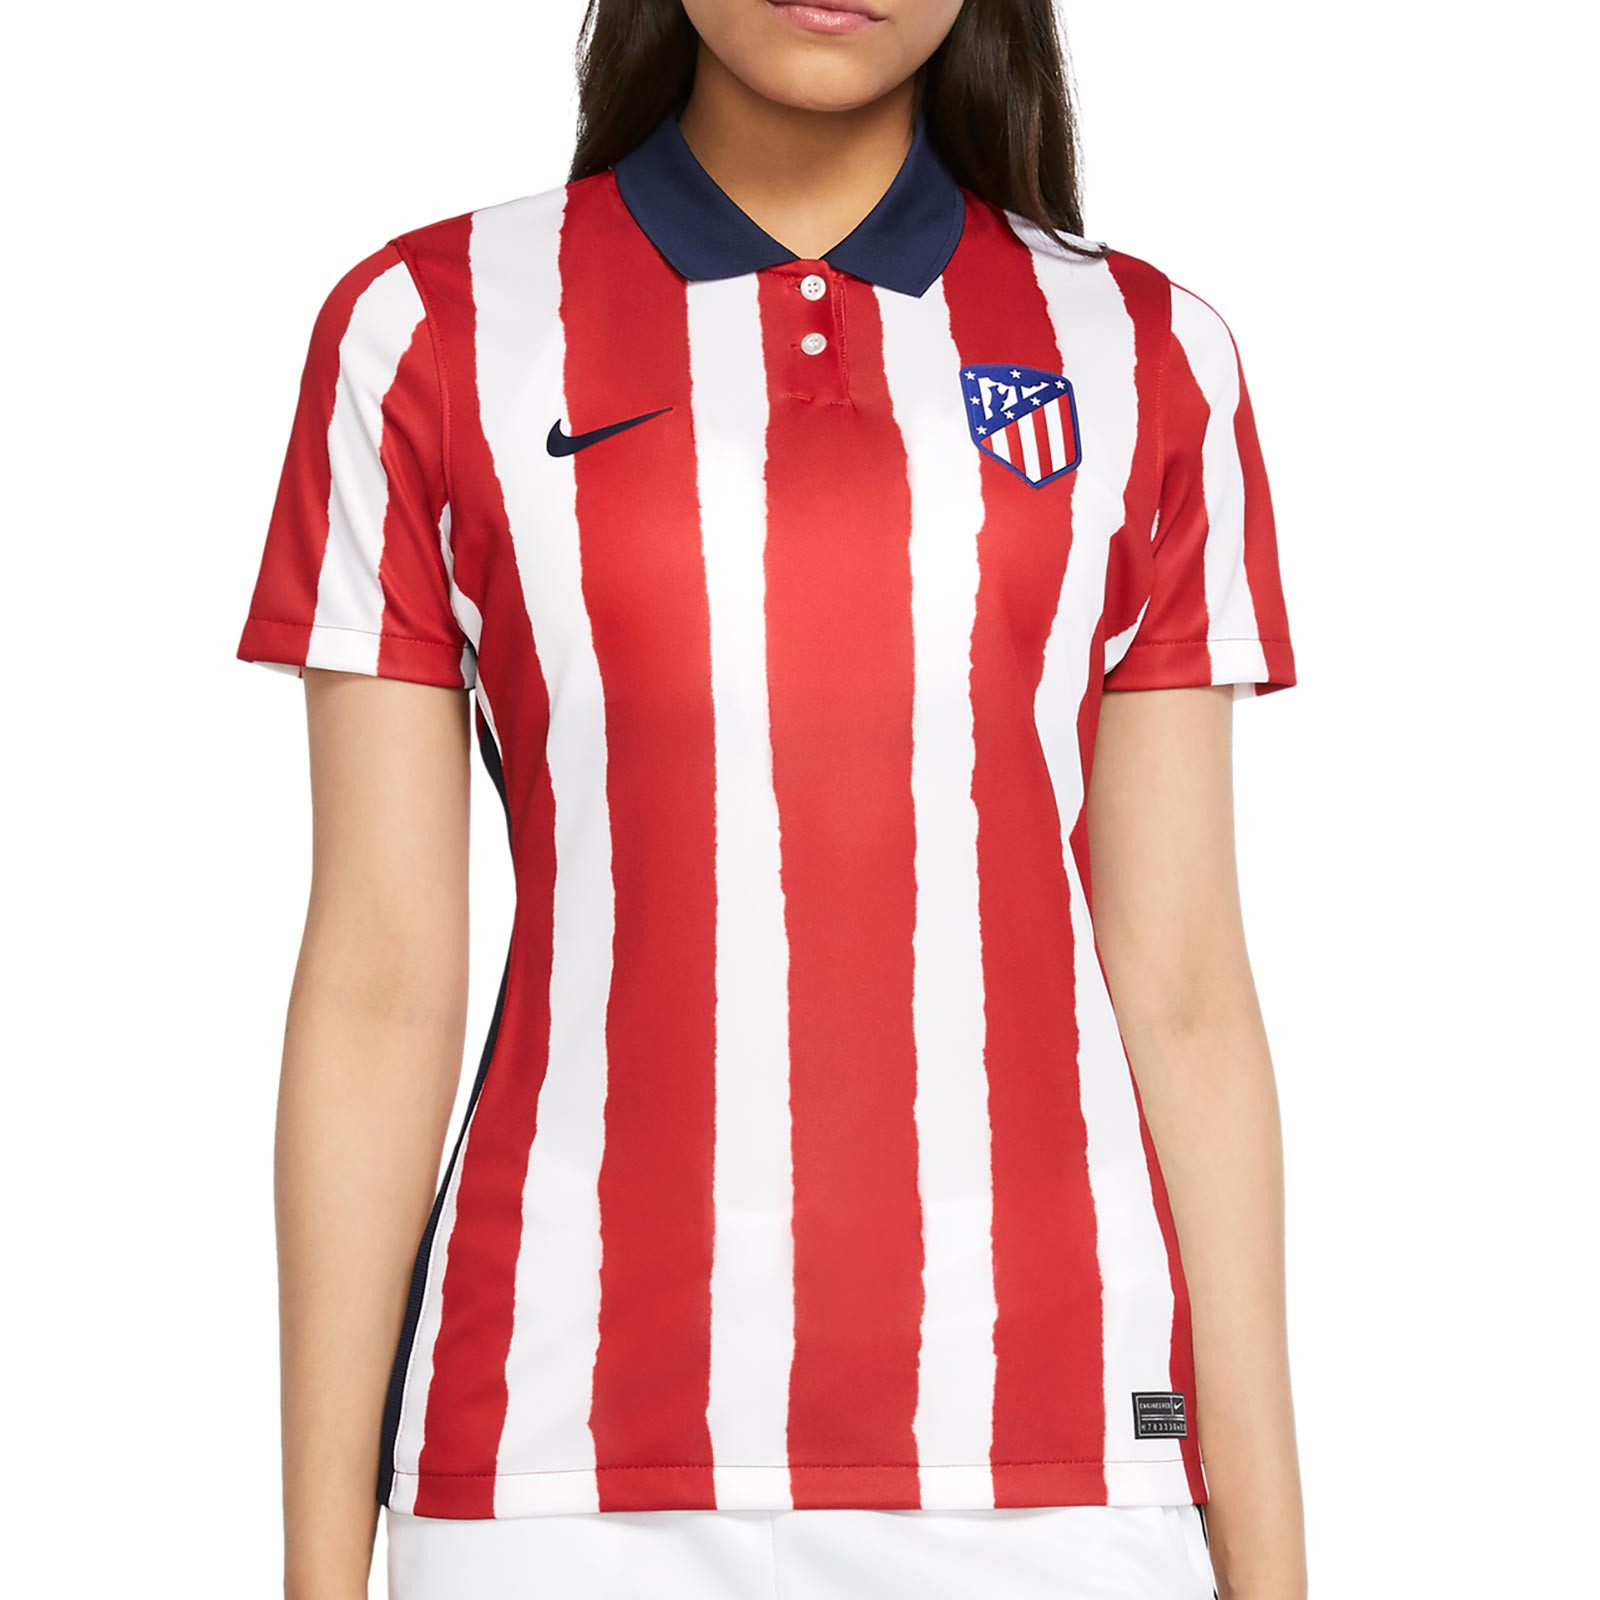 Camiseta Nike Atlético 1a mujer 2020 futbolmania